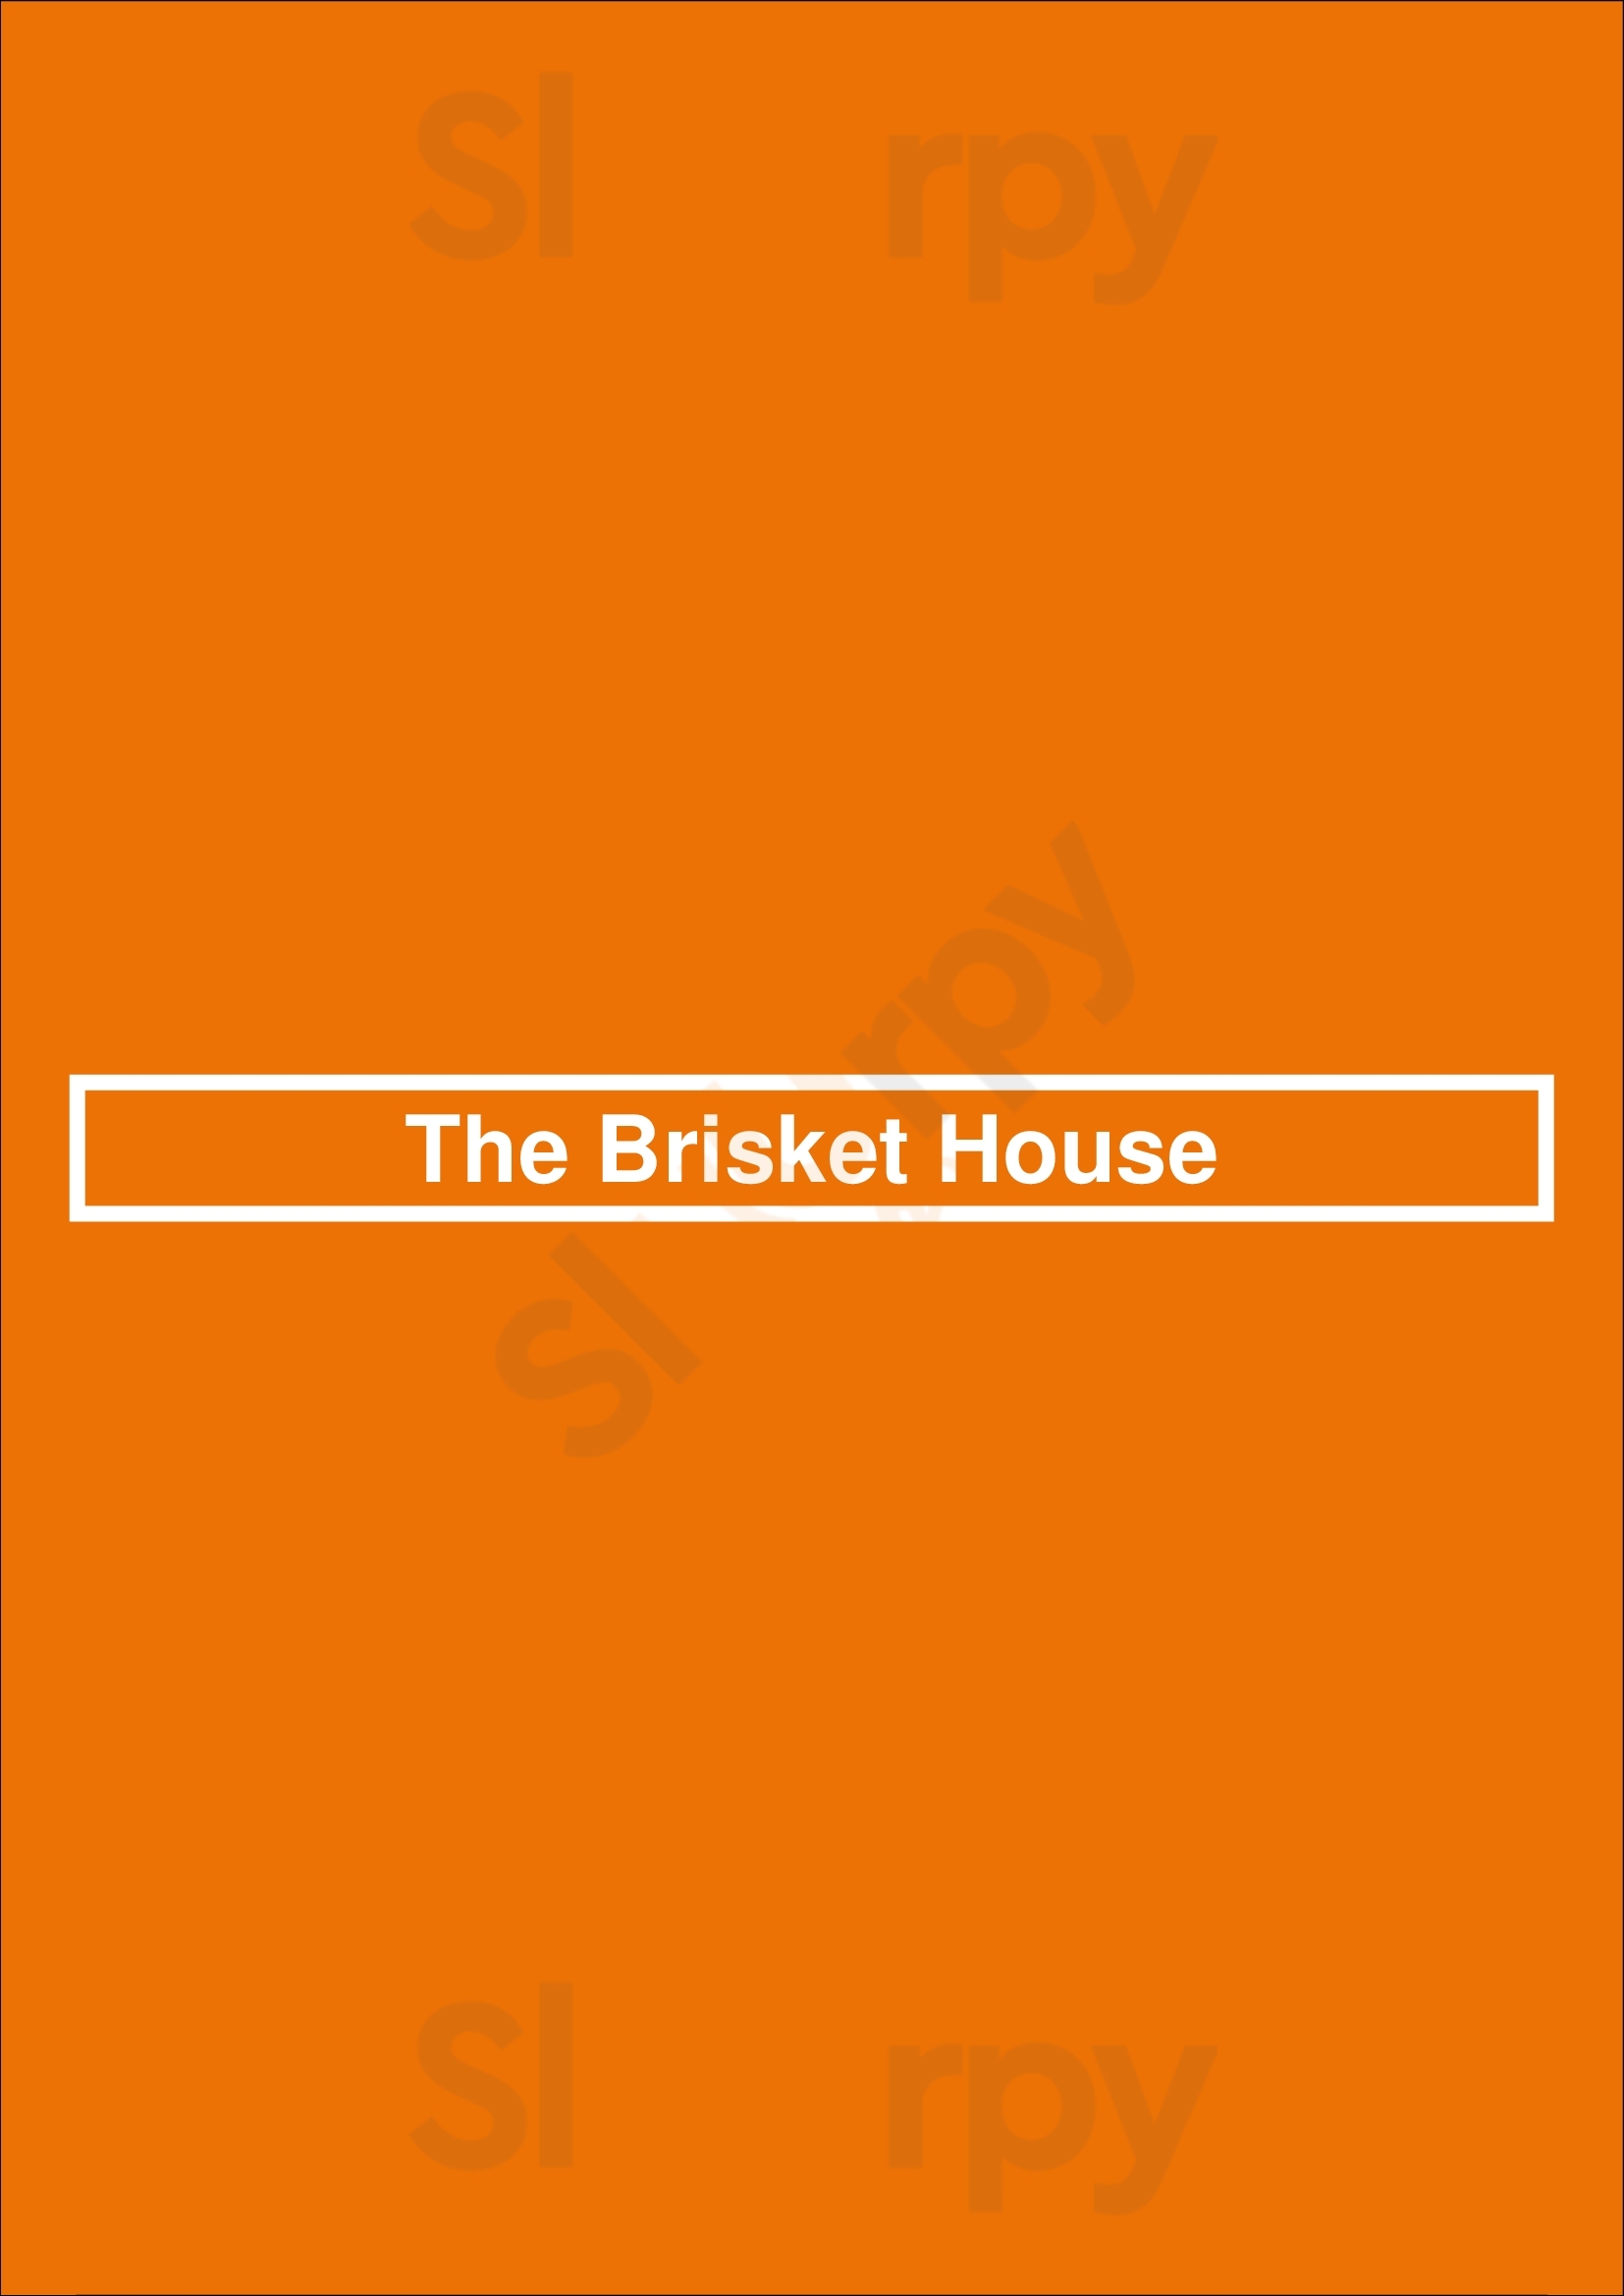 The Brisket House Houston Menu - 1